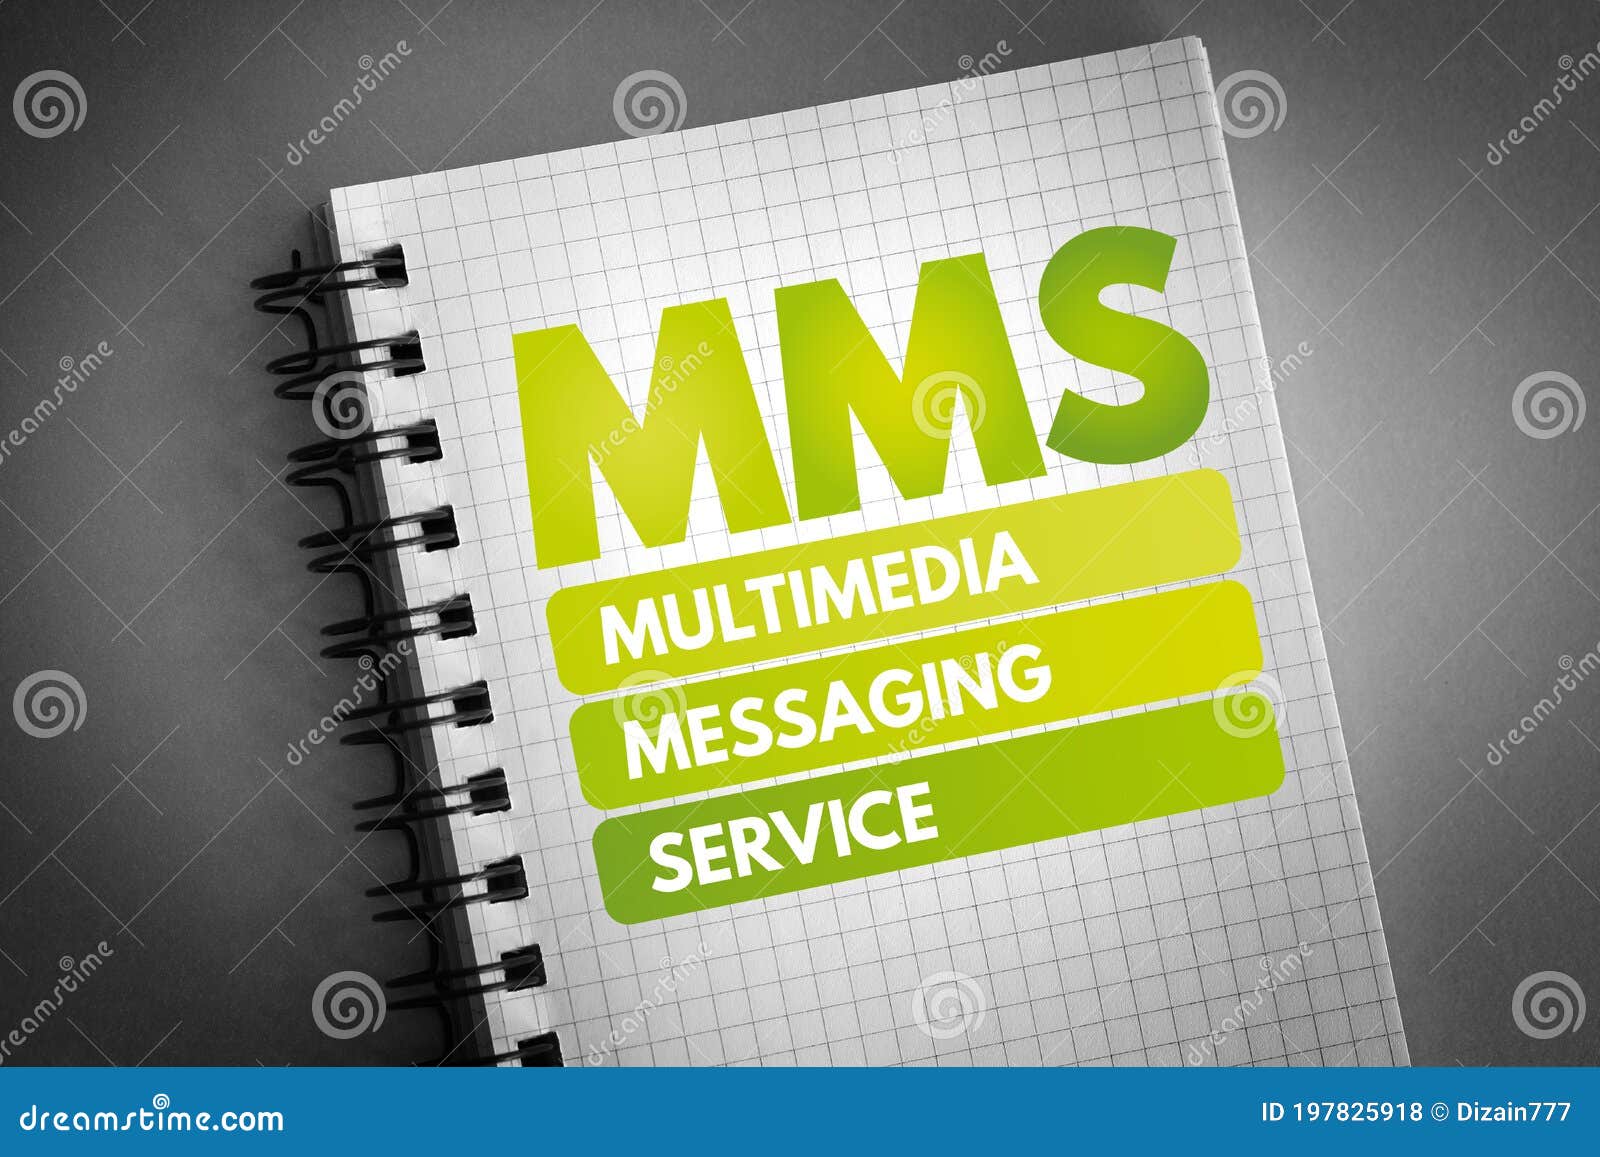 mms - multimedia messaging service acronym